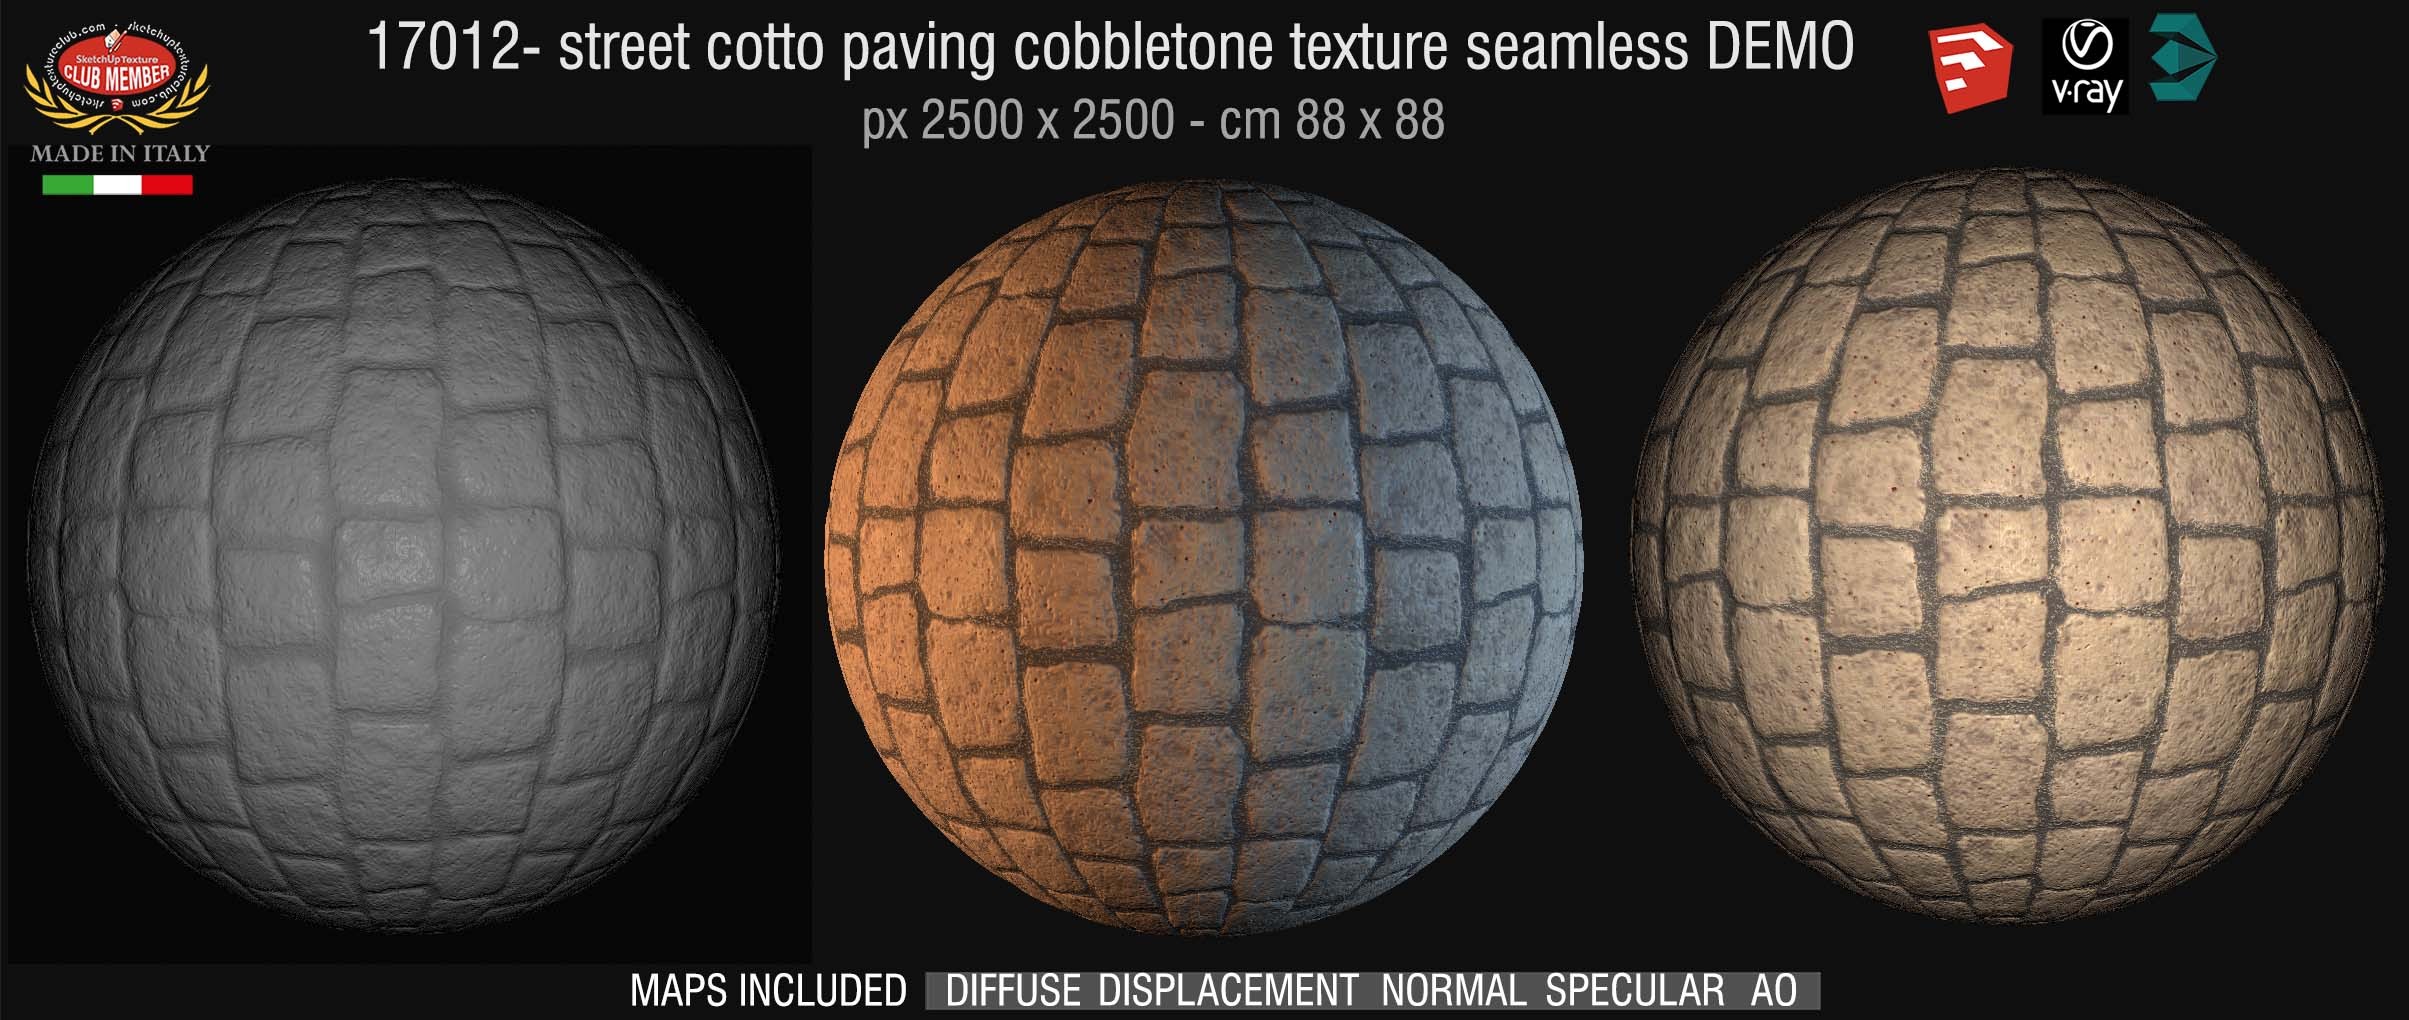 17012 HR Street cotto paving cobblestone texture seamless + maps DEMO